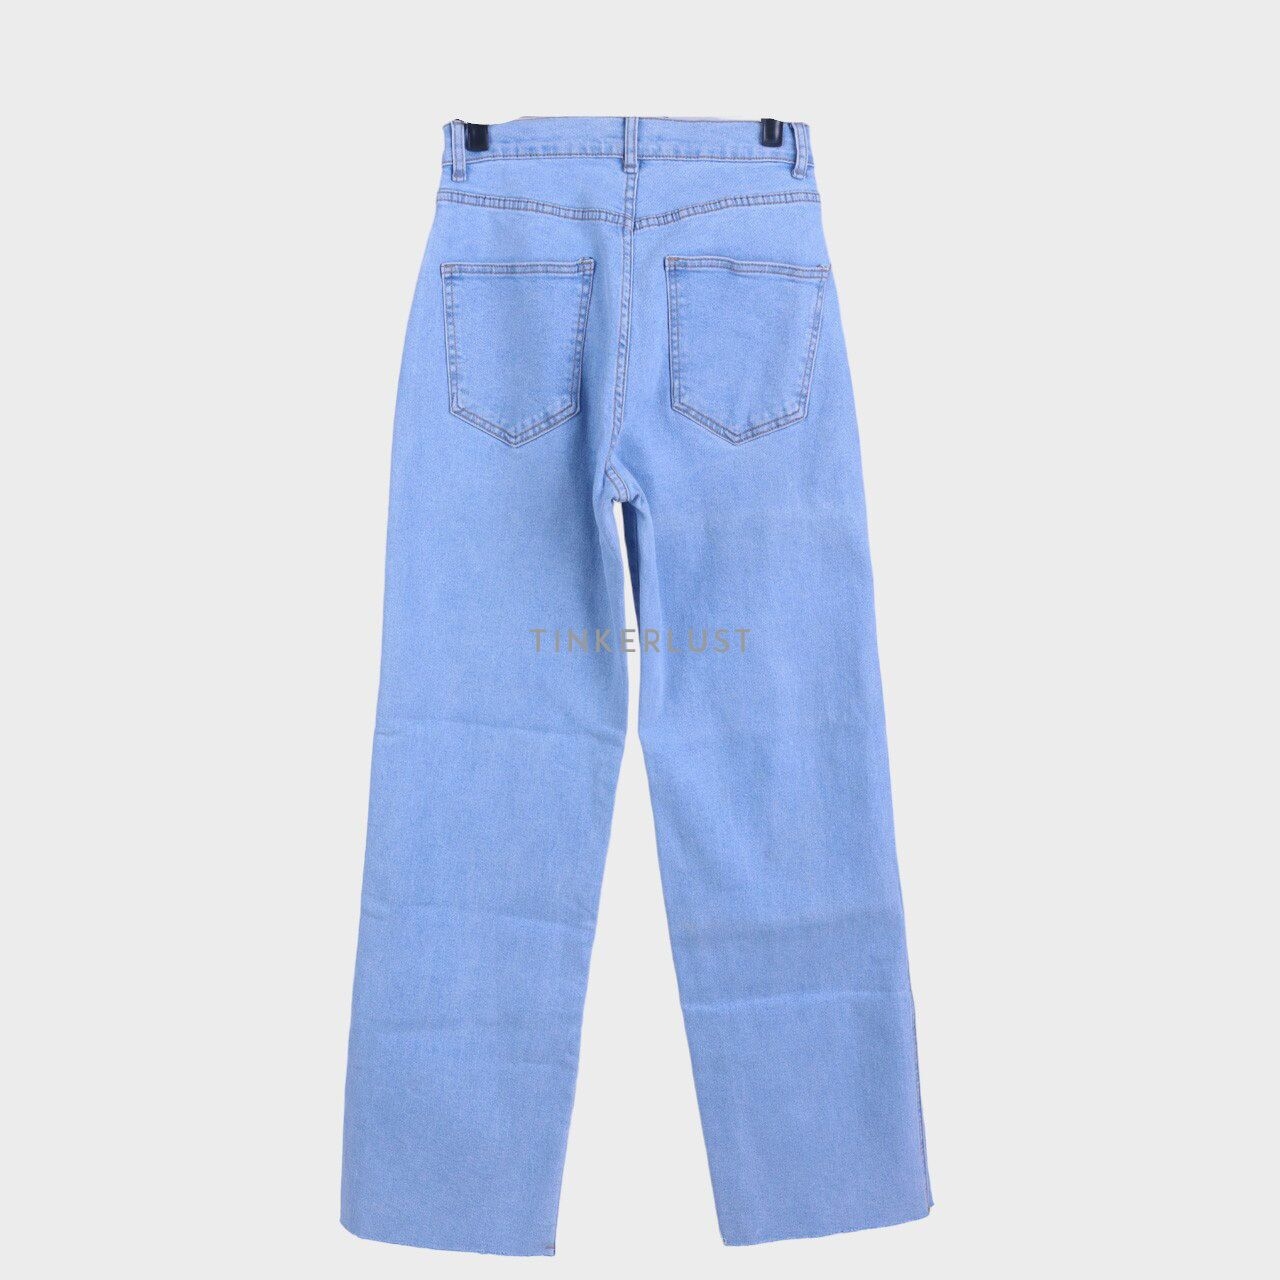 3Mongkis Blue Jeans Long Pants